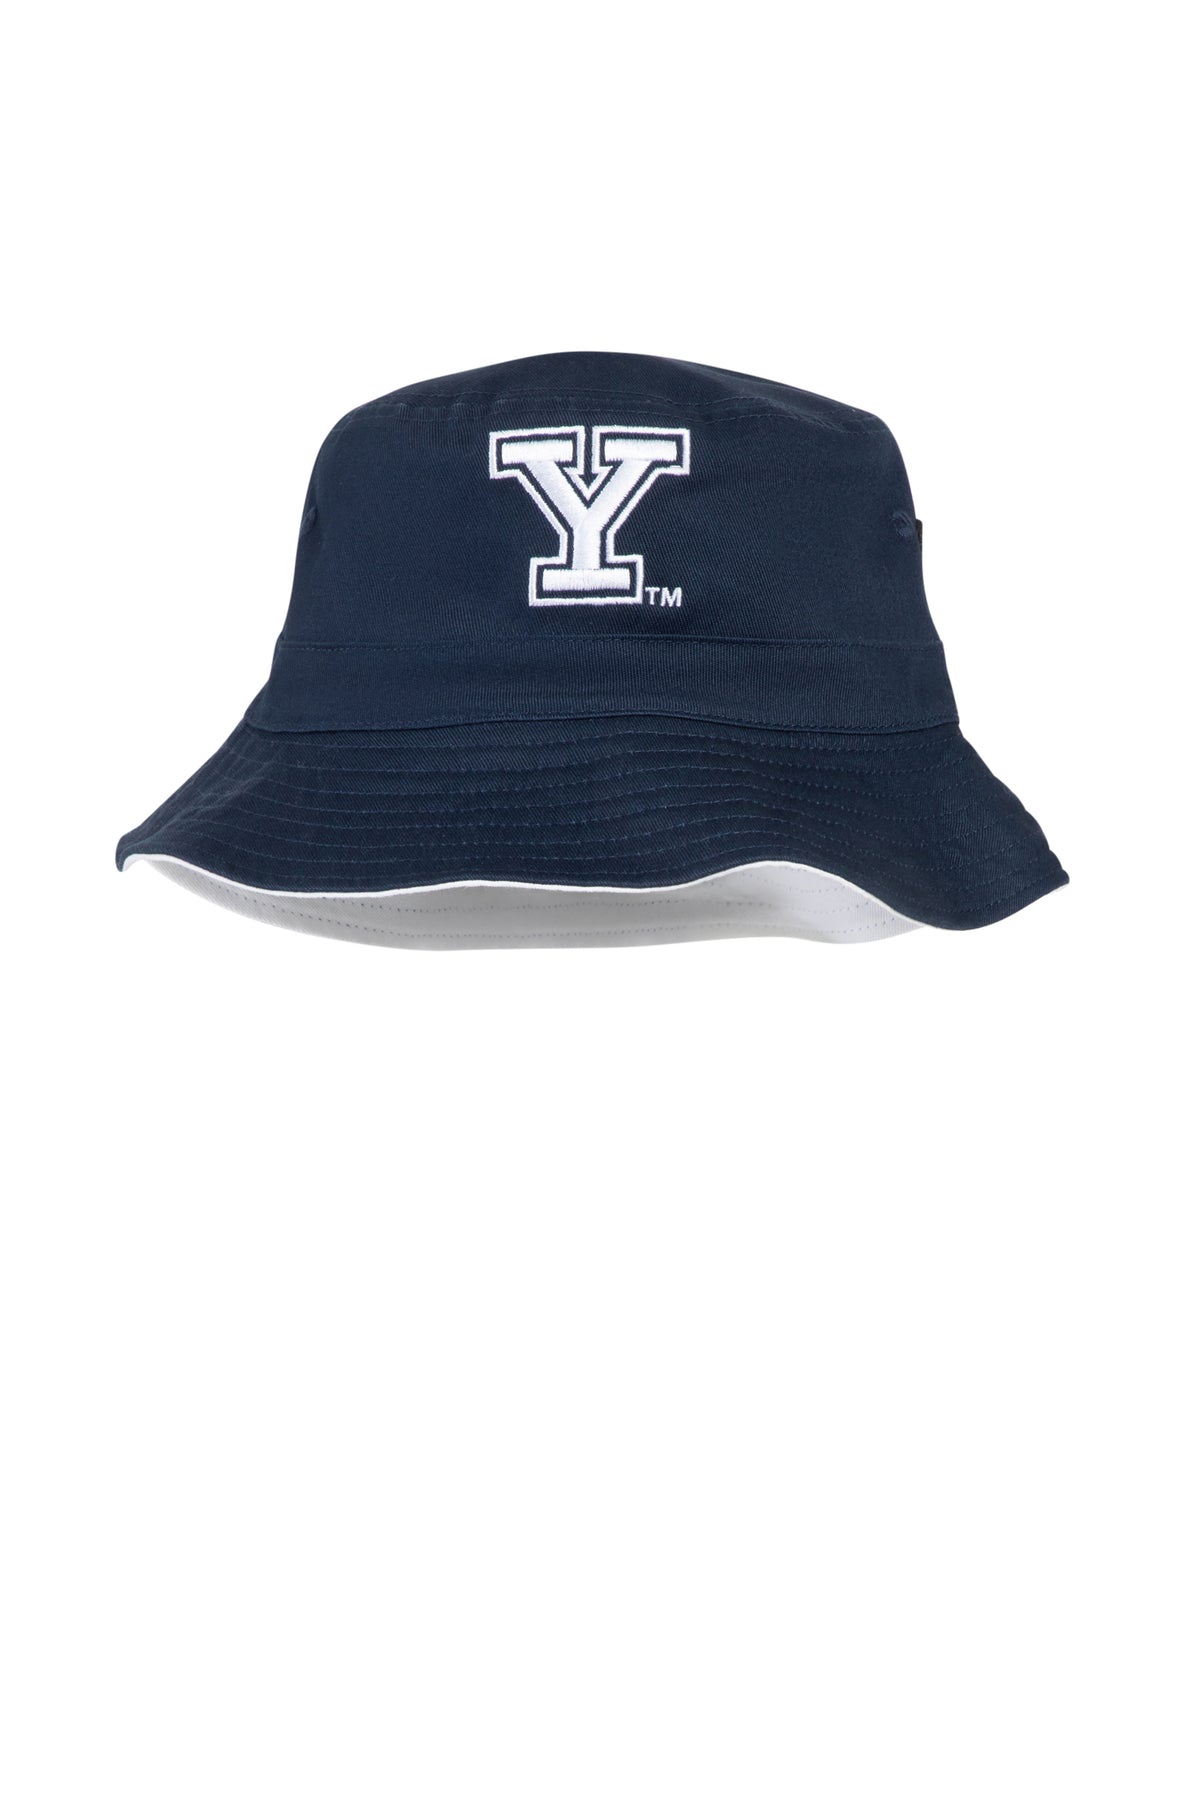 Yale University Reversible Bucket Hat